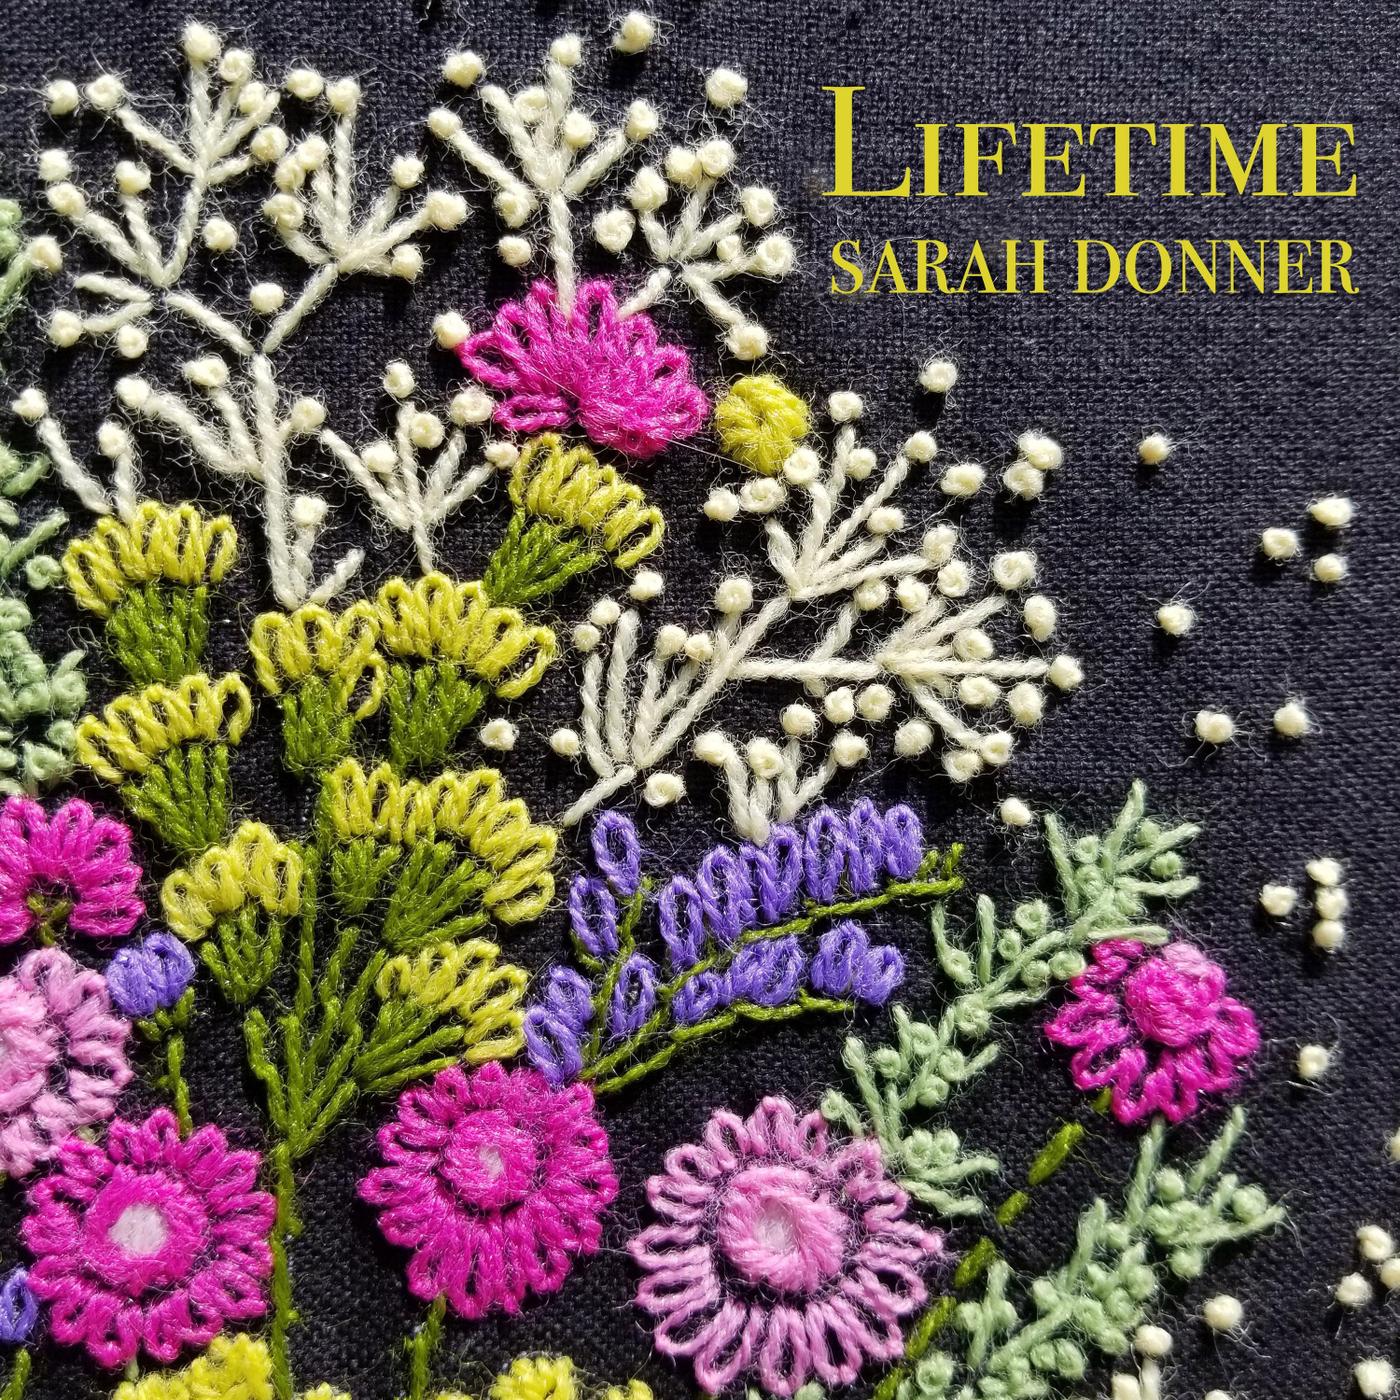 Sarah Donner - Lifetime